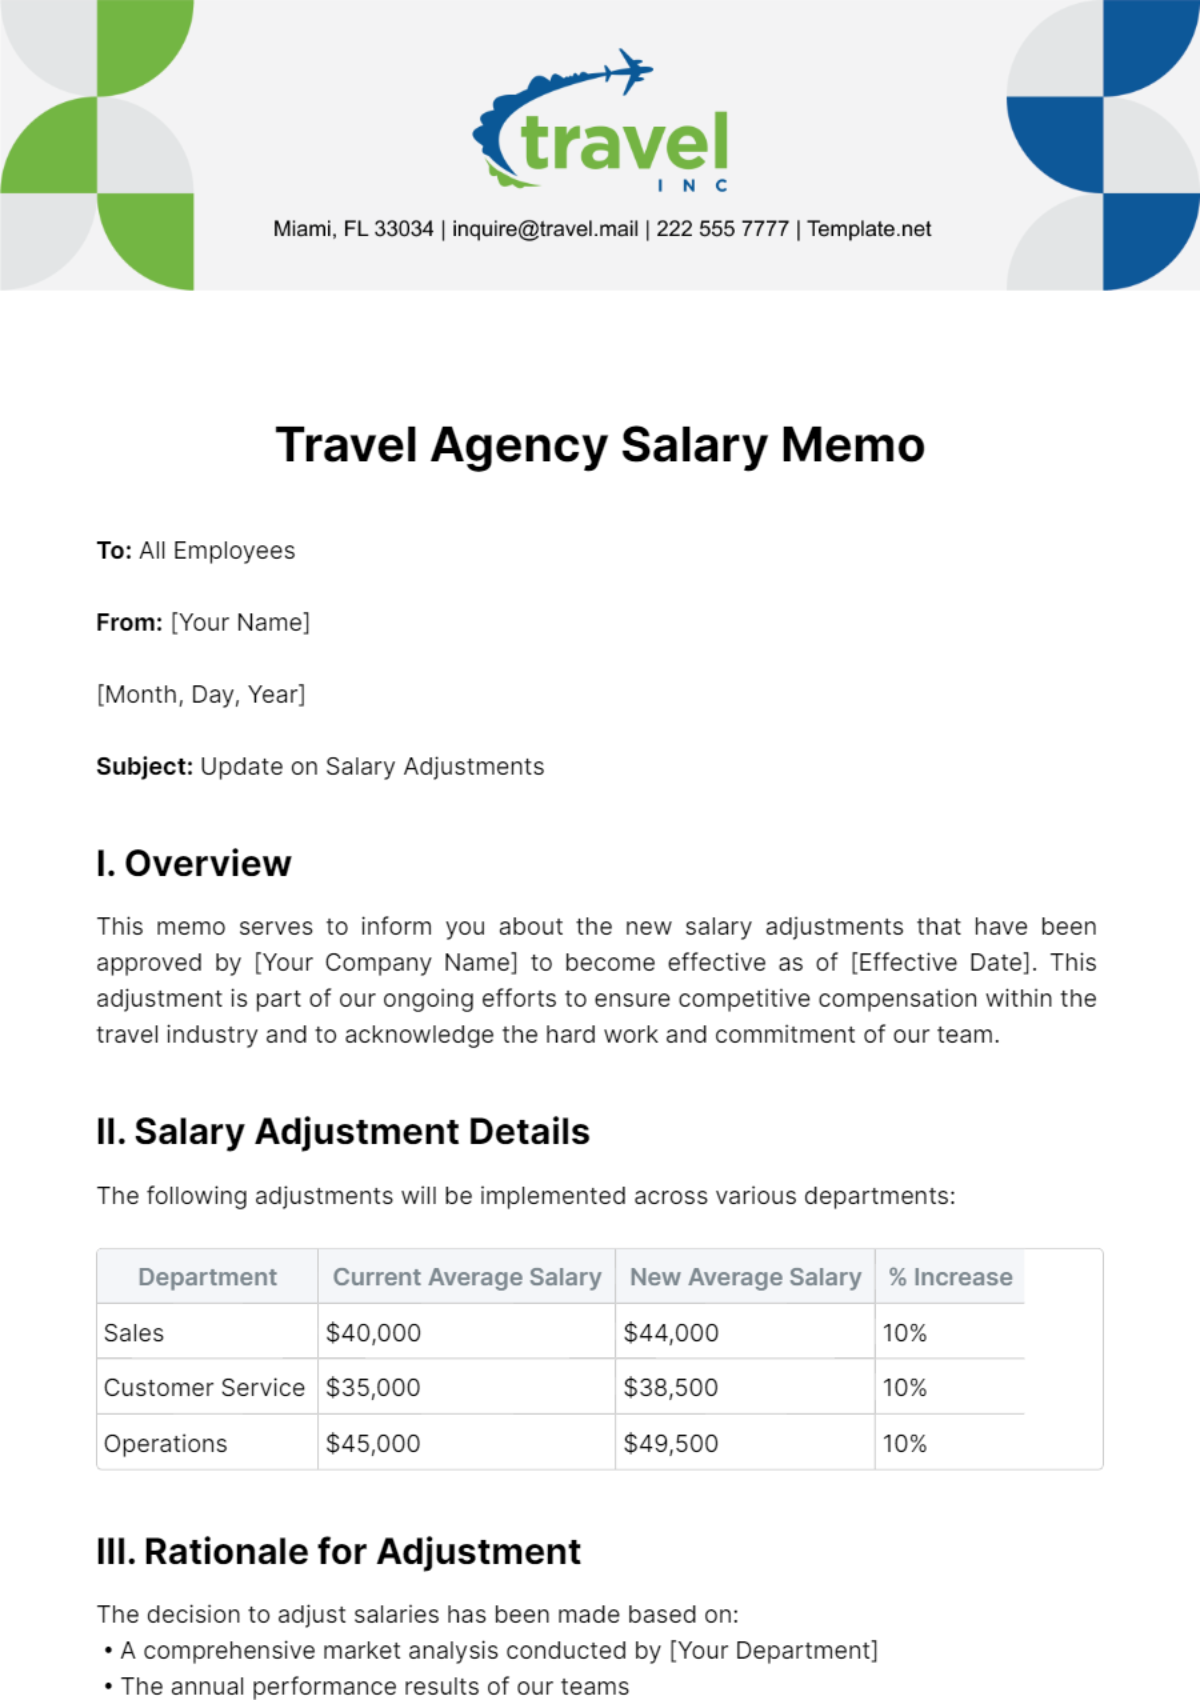 Travel Agency Salary Memo Template